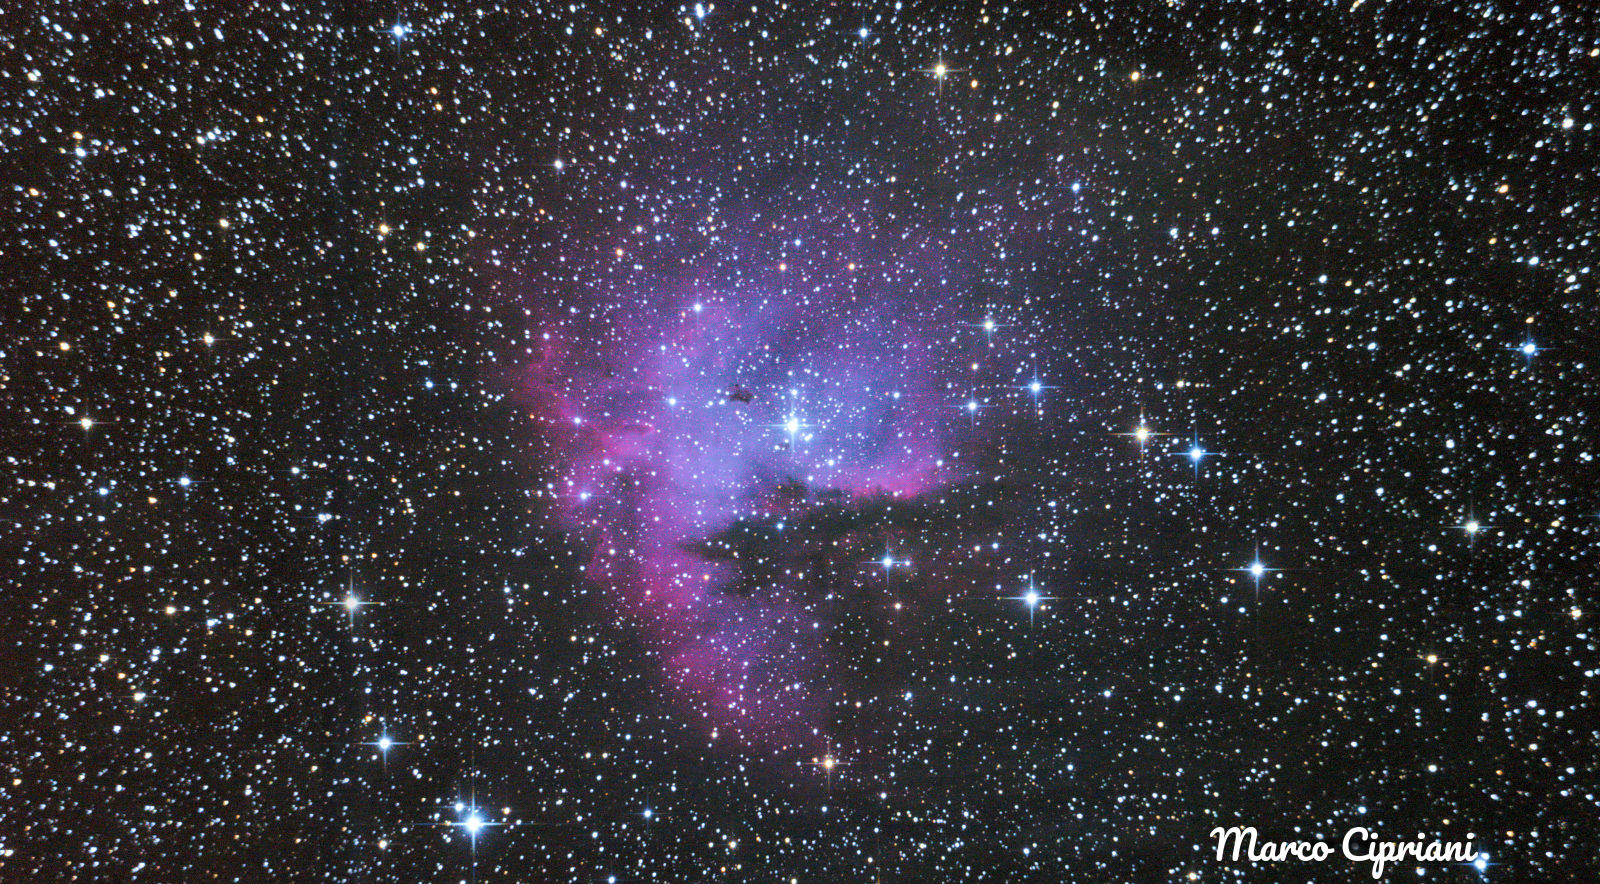 The Pacman Nebula